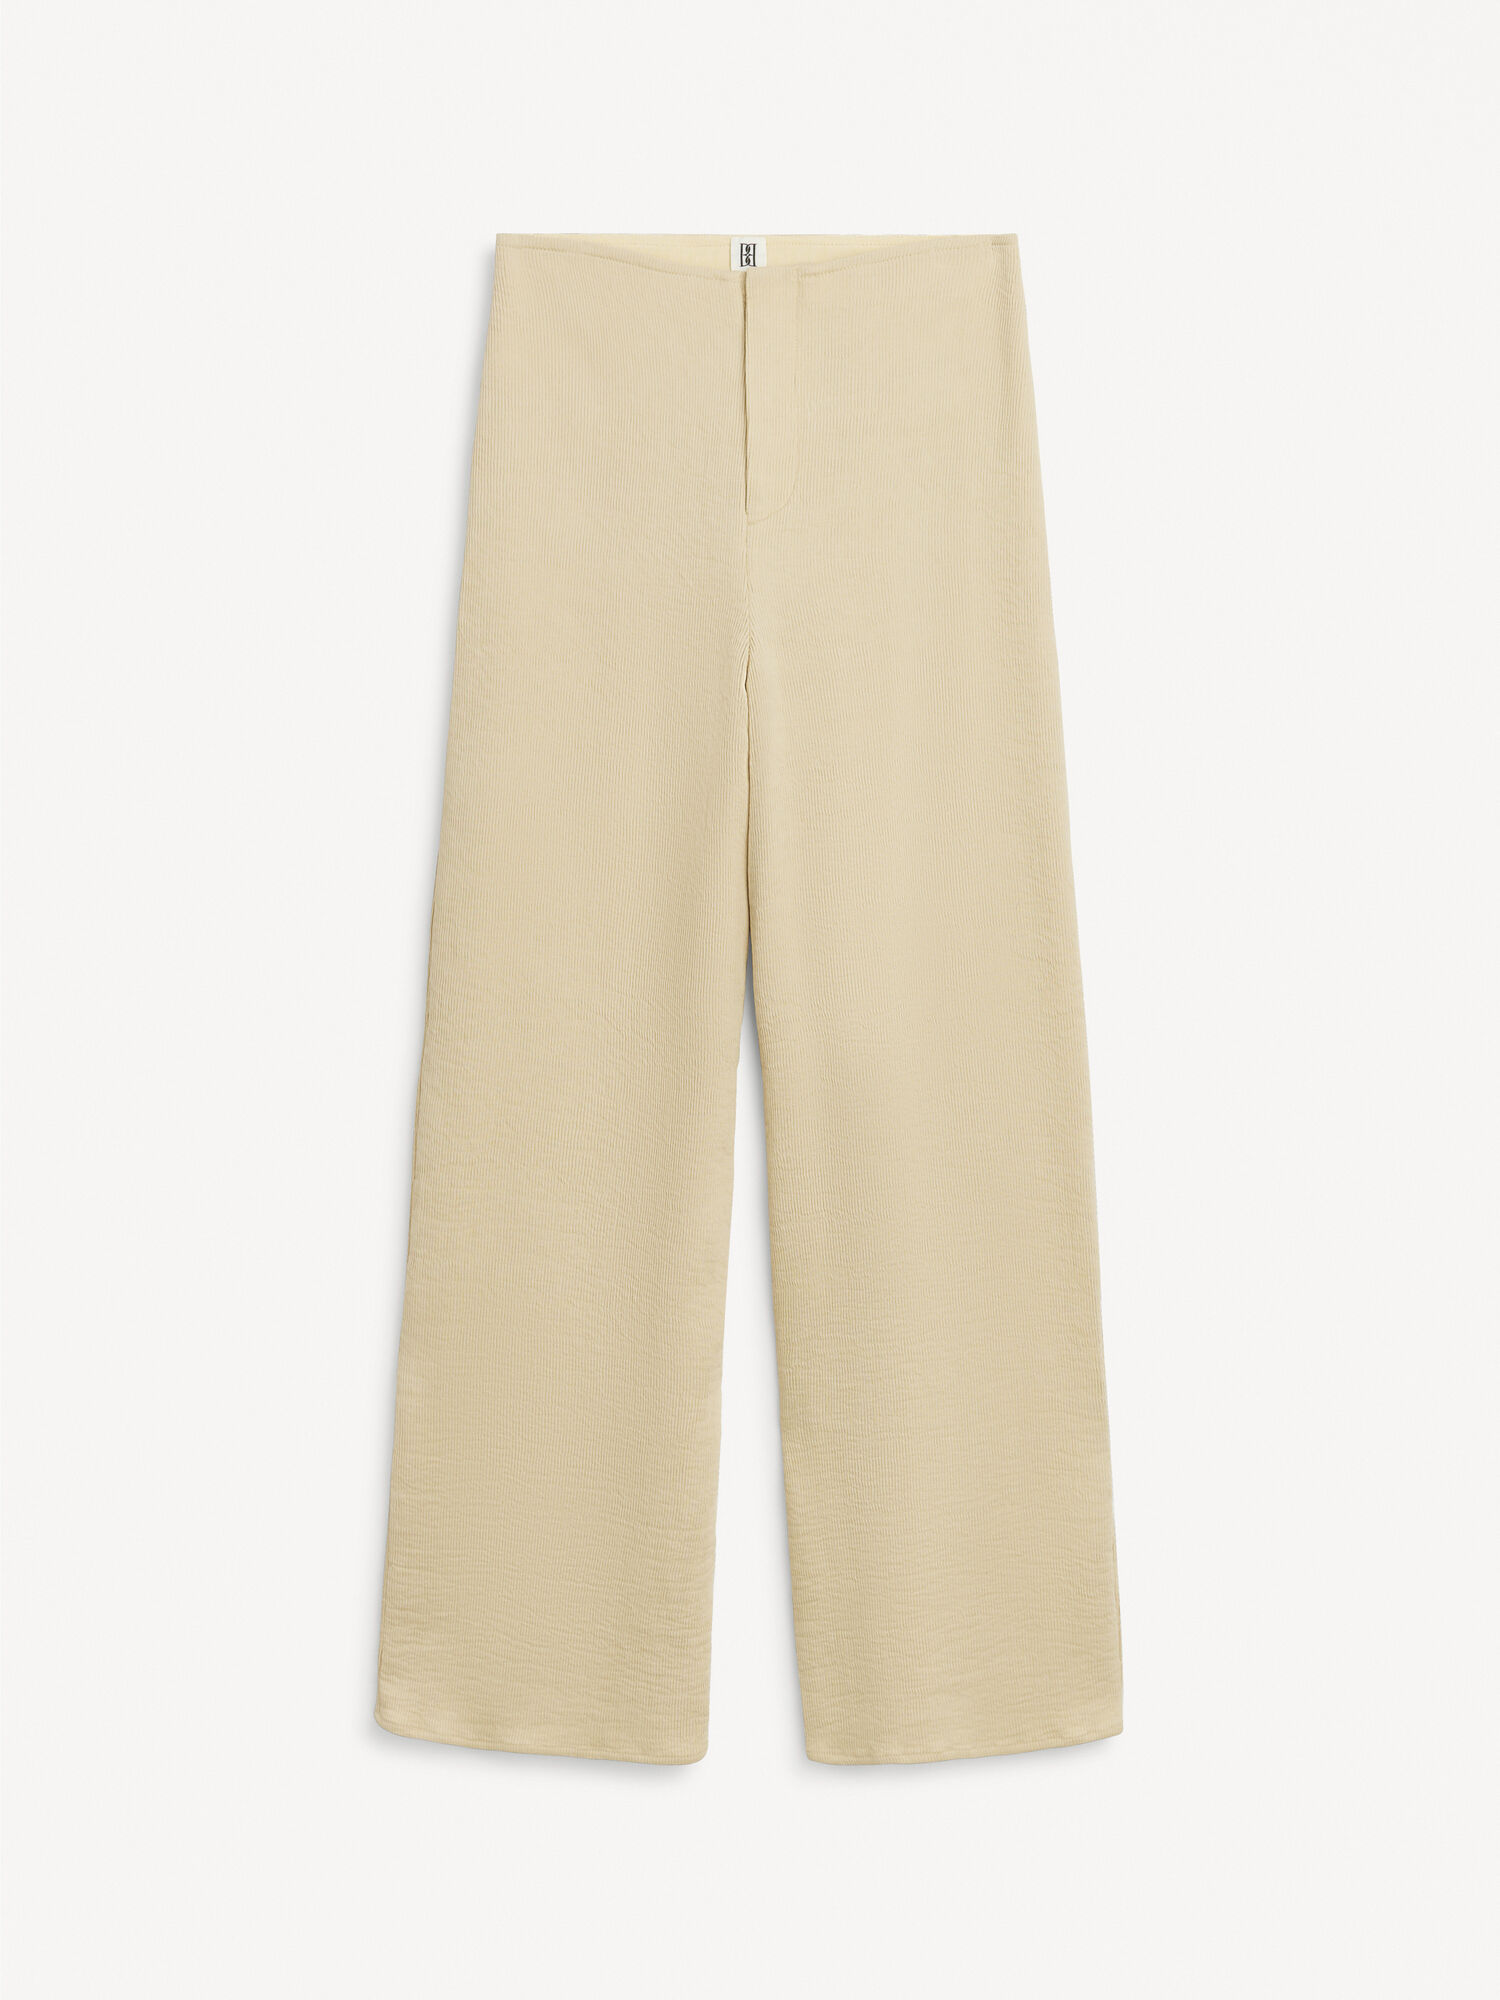 Marchei high-waist trousers